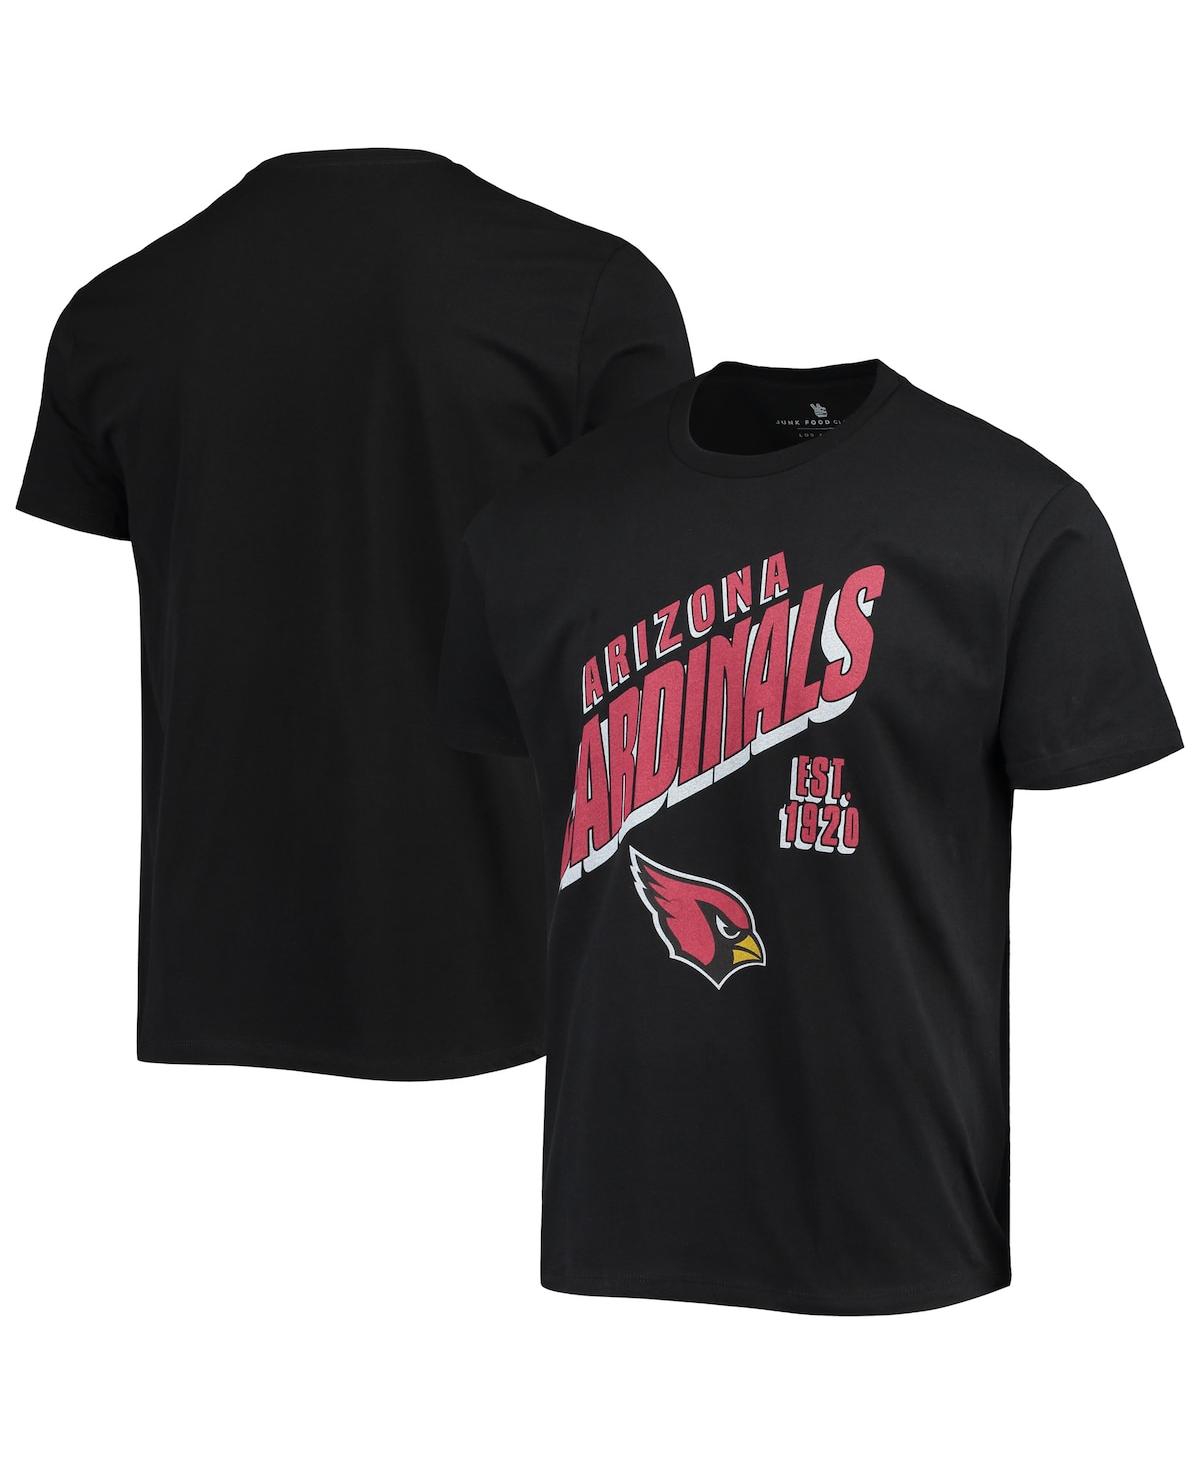 Men's Black Arizona Cardinals Slant T-shirt - Black